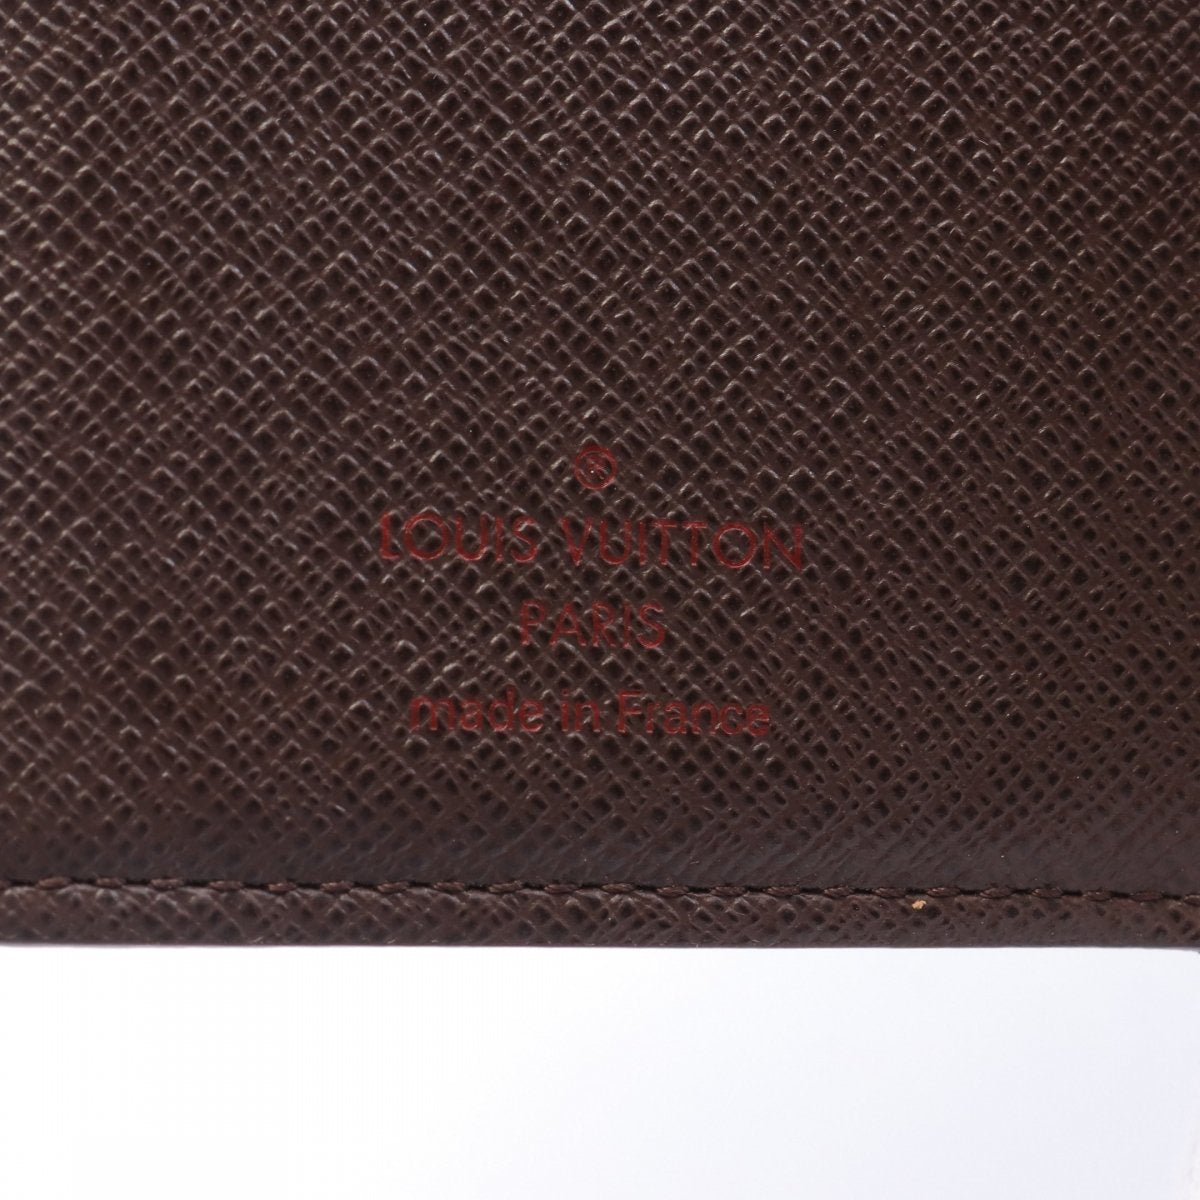 Louis Vuitton Damier Ebene Canvas Tri Fold Wallet Louis Vuitton